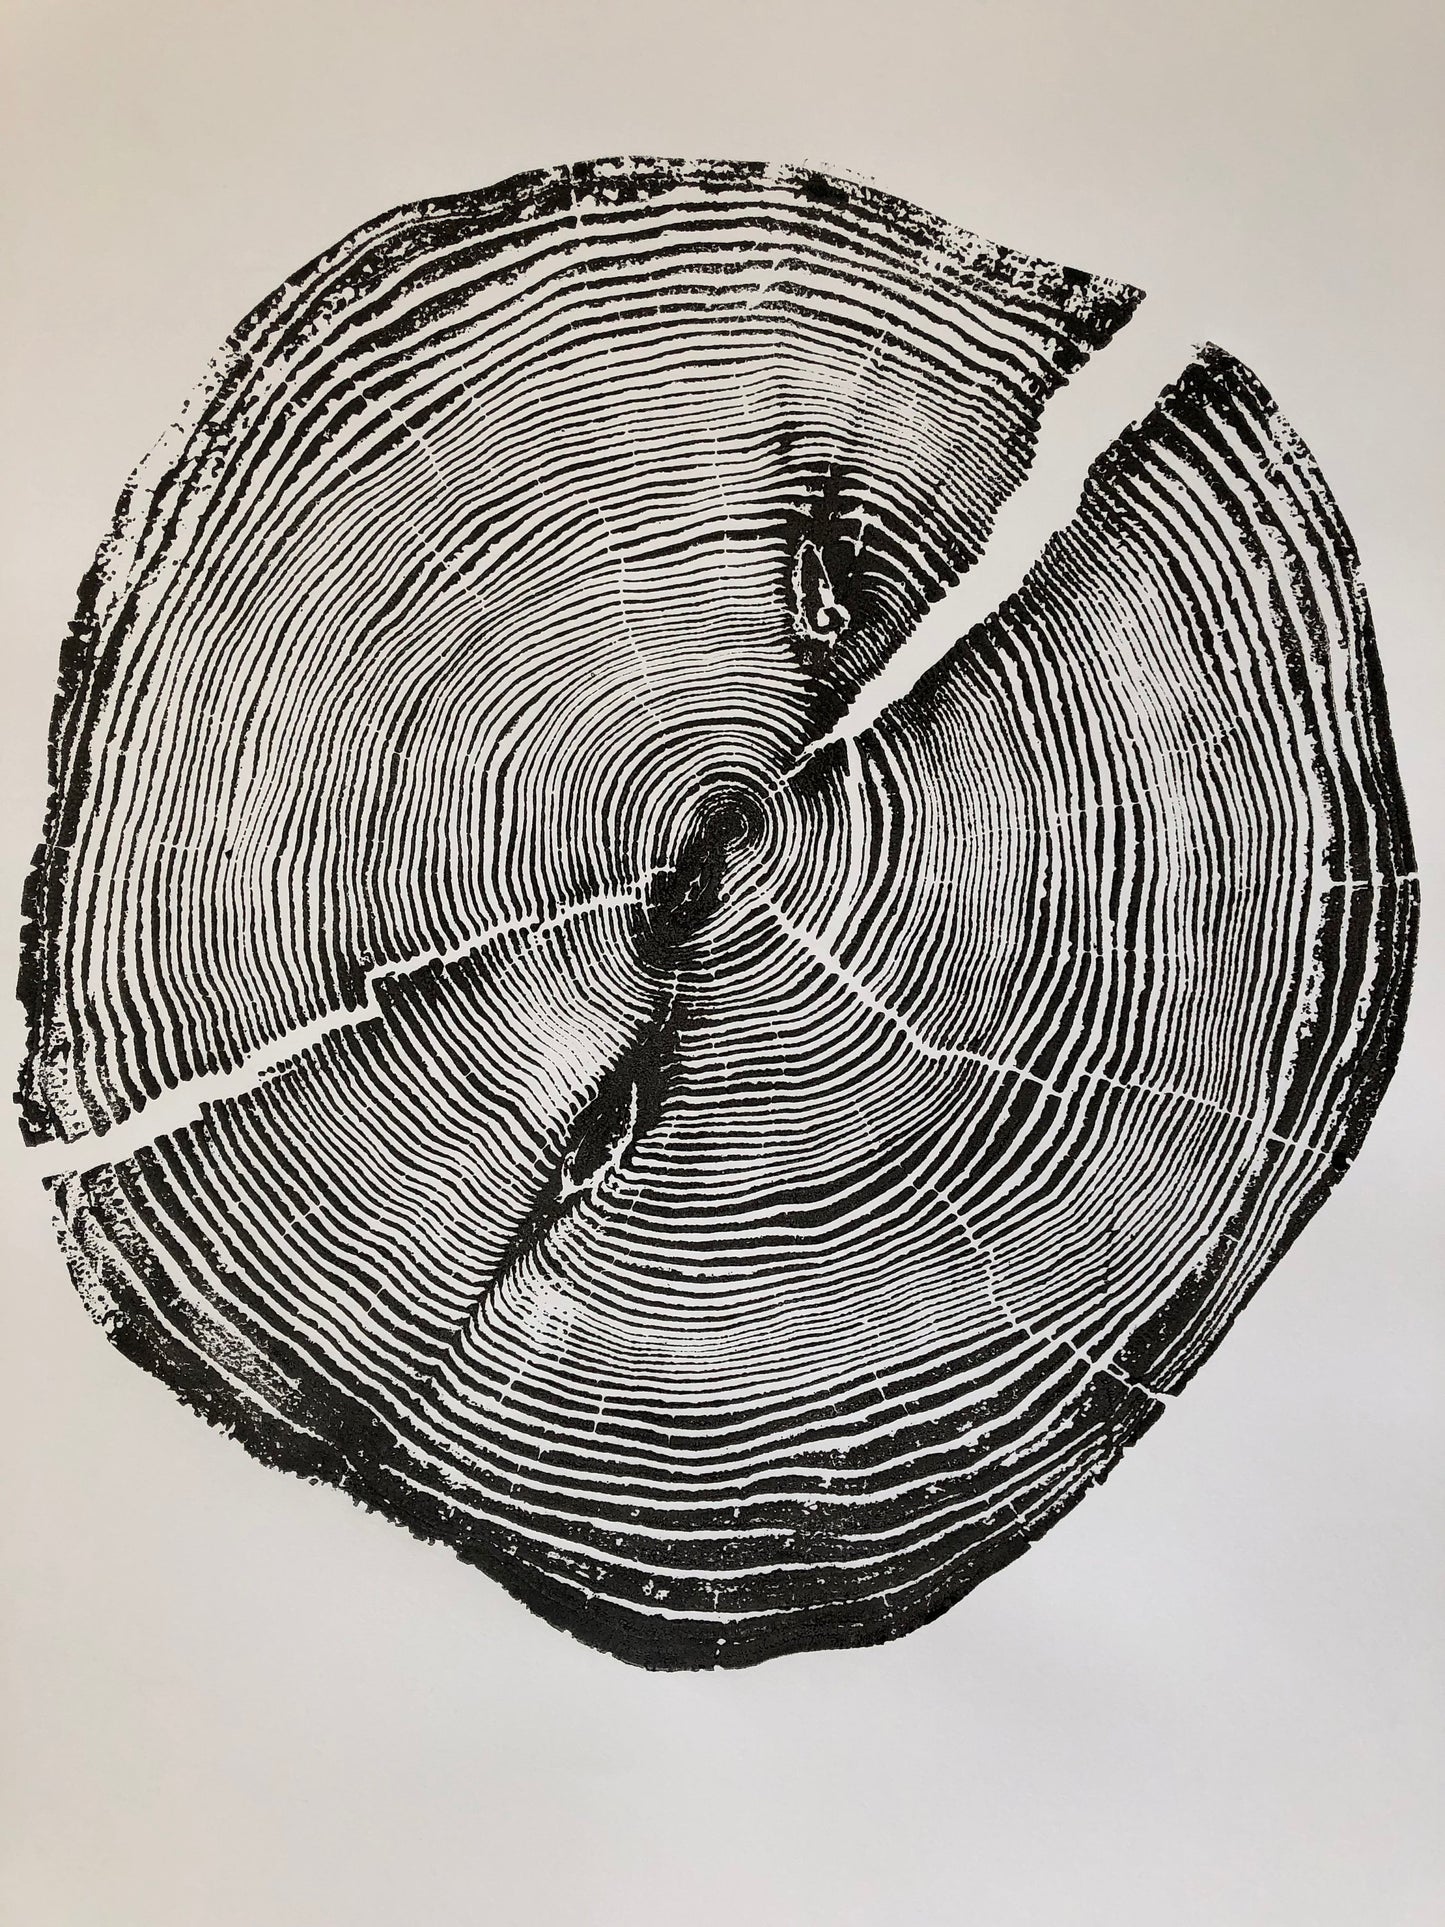 Lake Superior, Michigan Driftwood Pine - 18x24 print